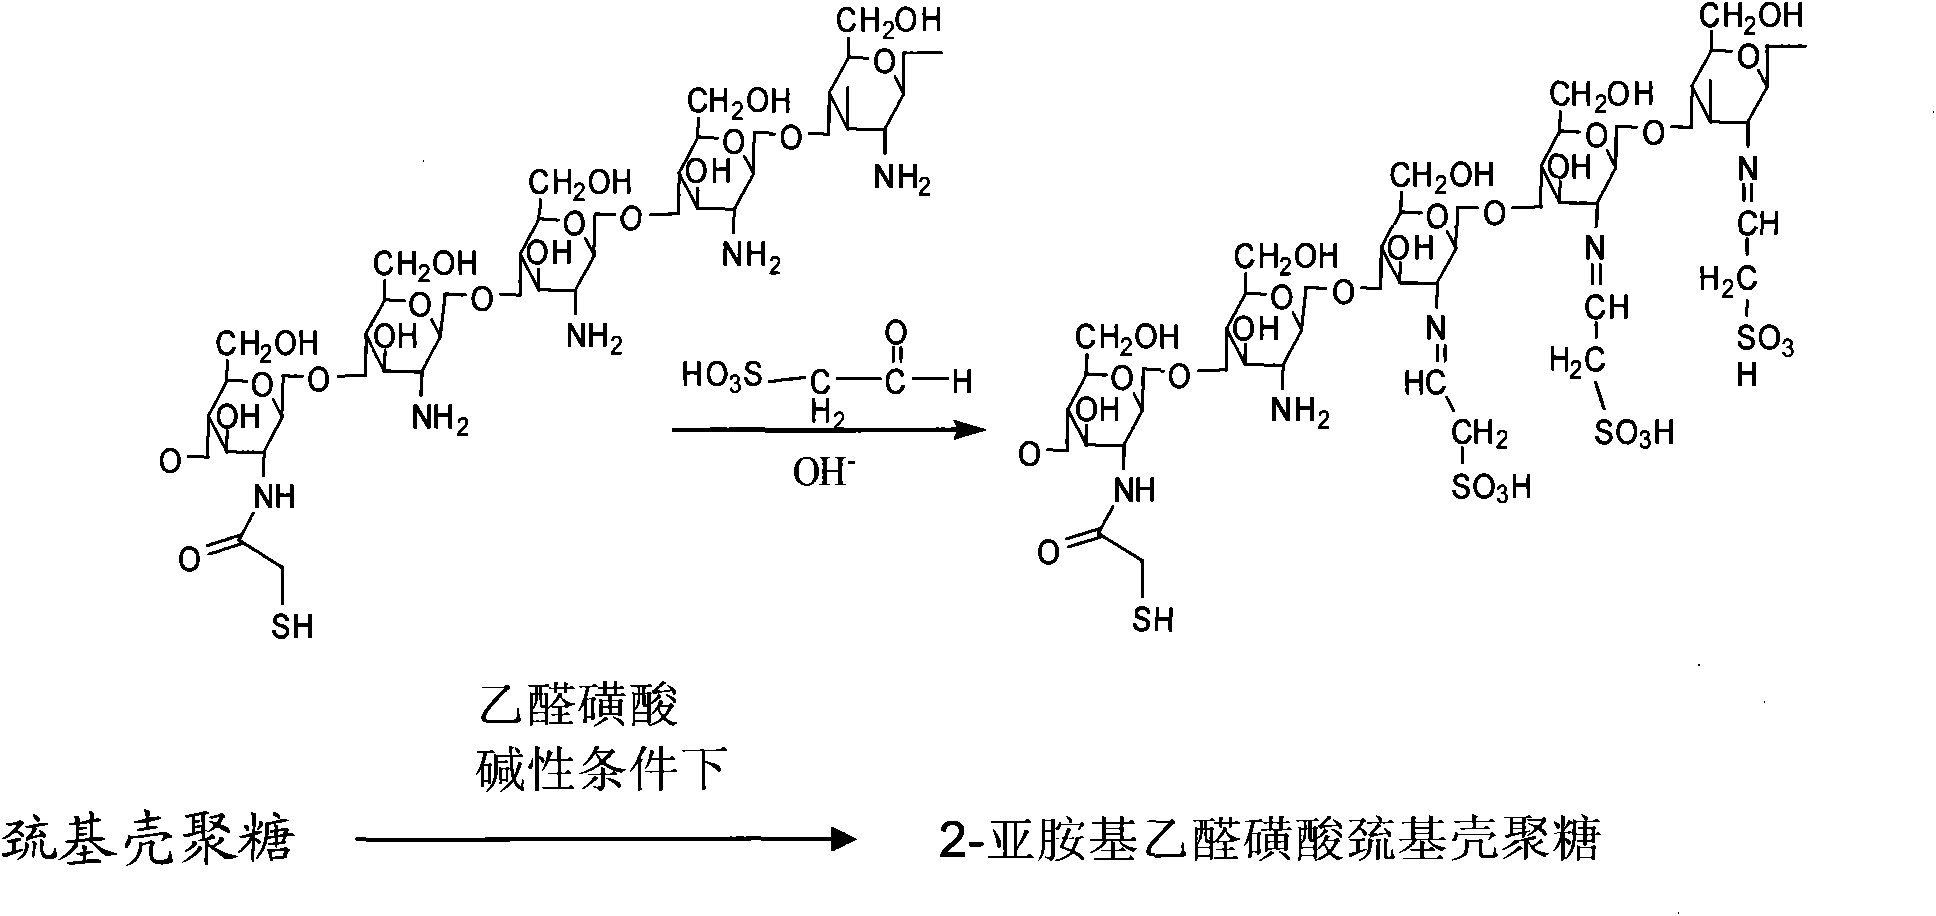 Sulfonation modification process of thio chitosan